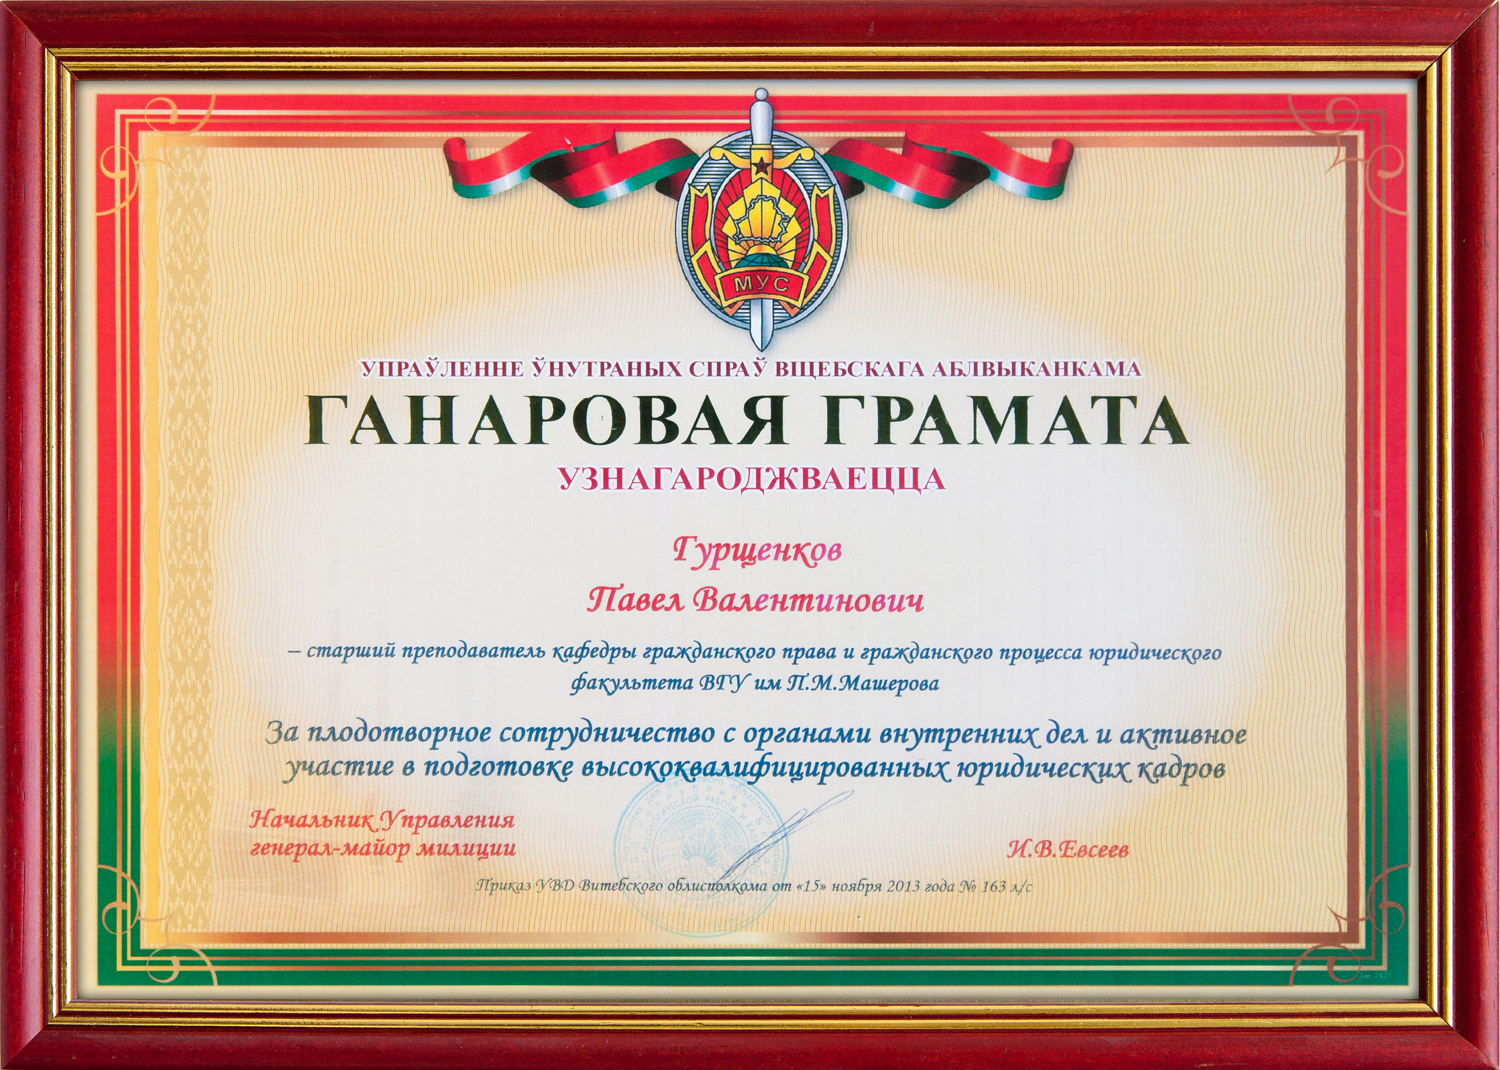 Почетная грамота от УВД Витебской области Республики Беларусь